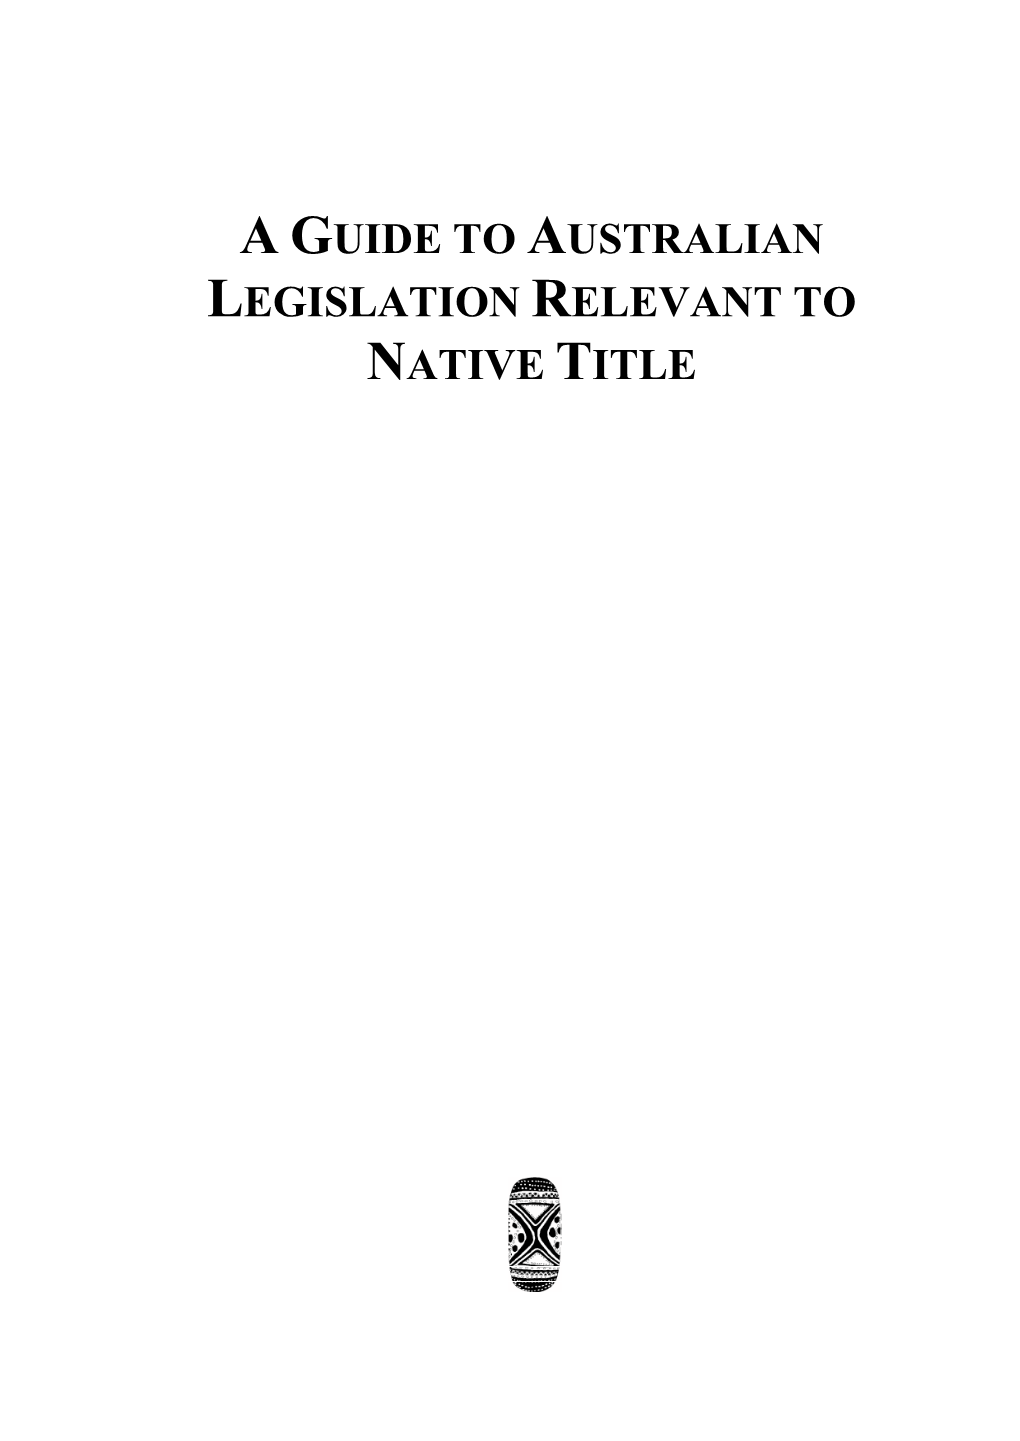 A Guide to Australian Legislation Relevant to Native Title